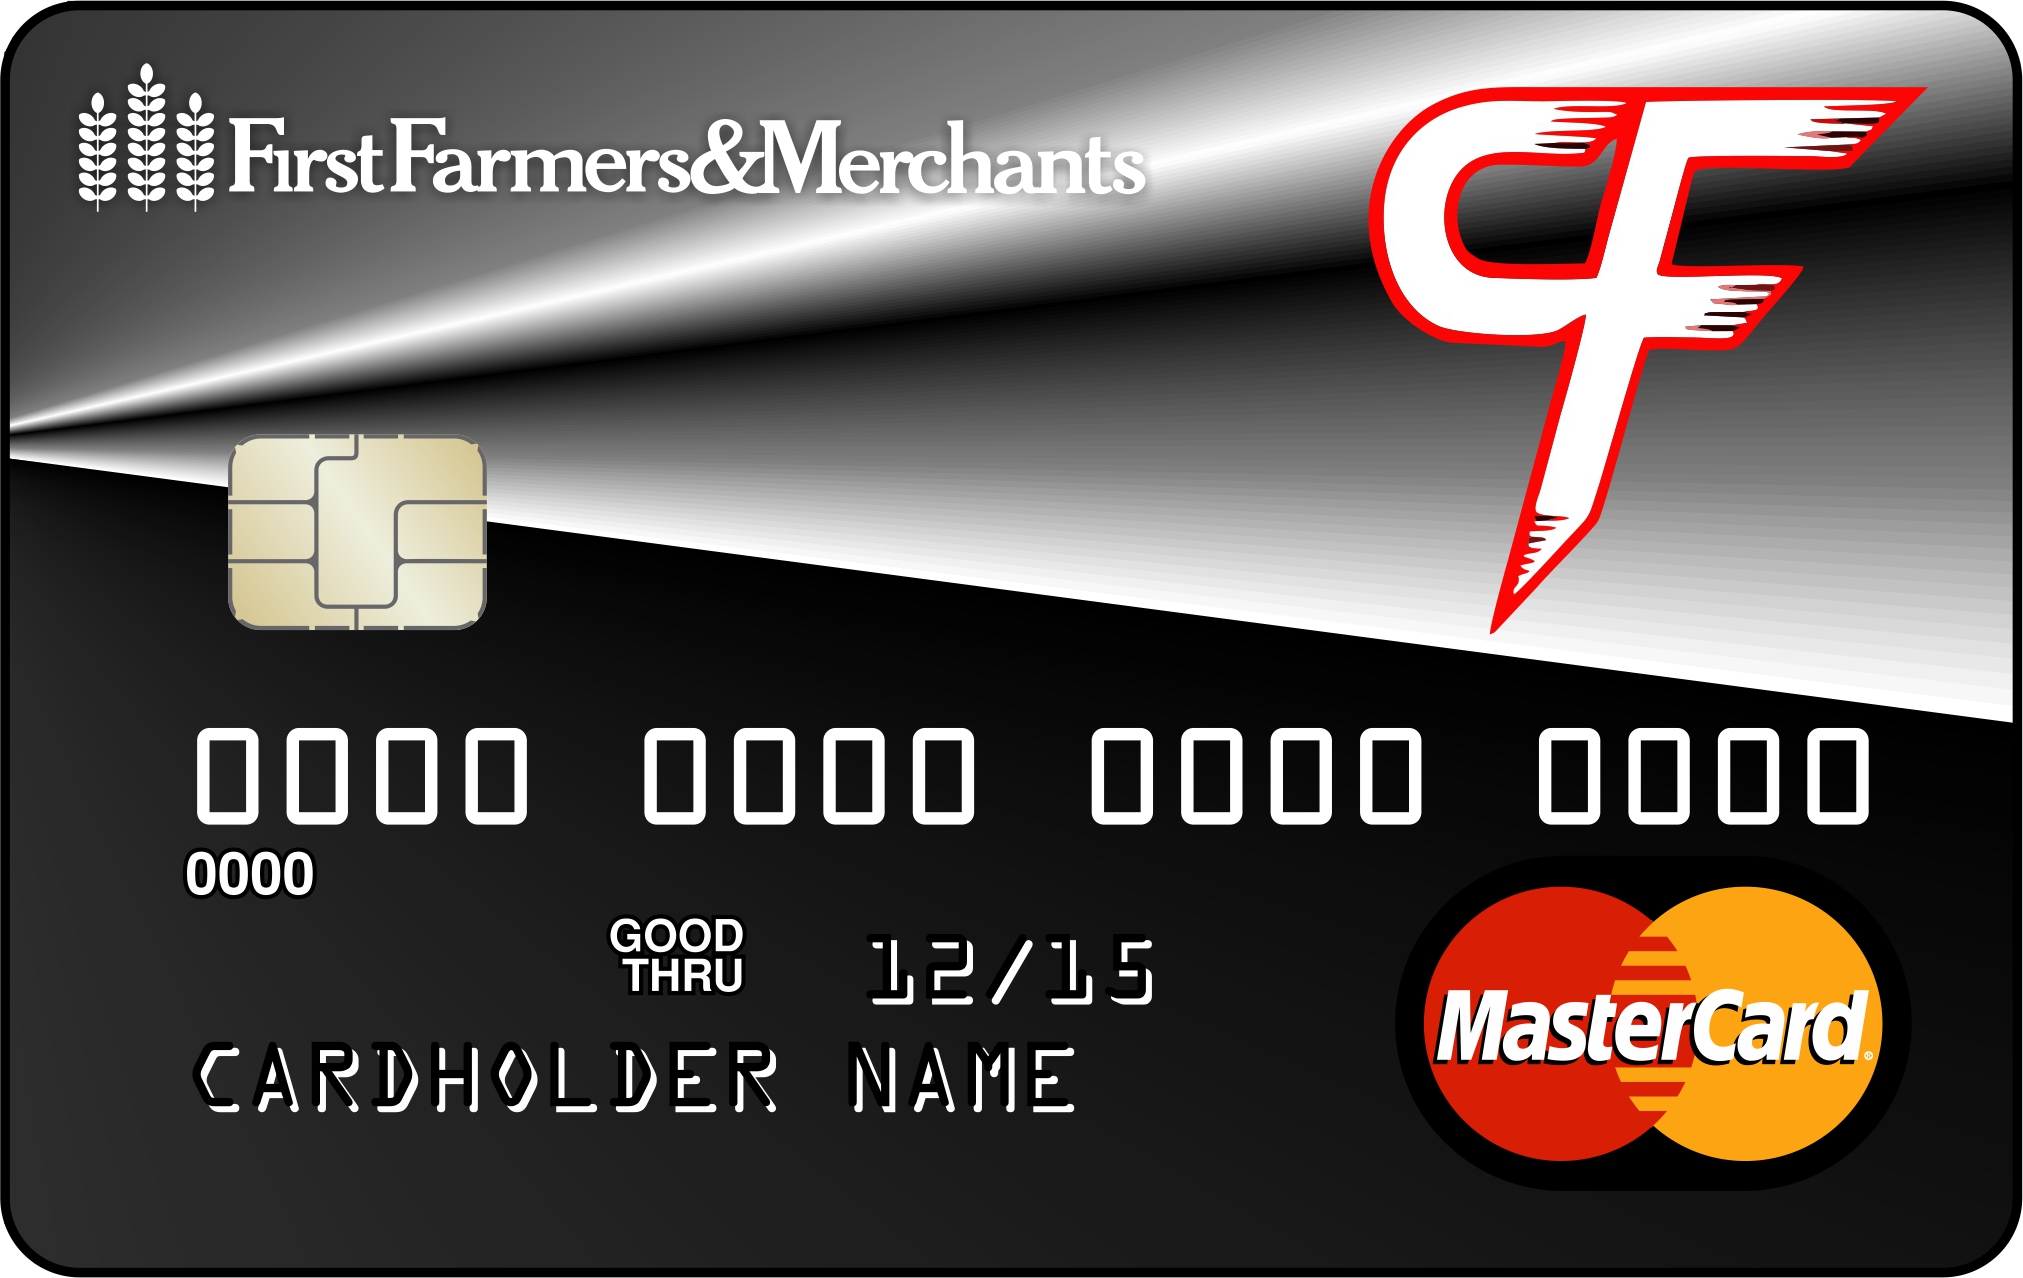 debit card with custom design of a CF on it